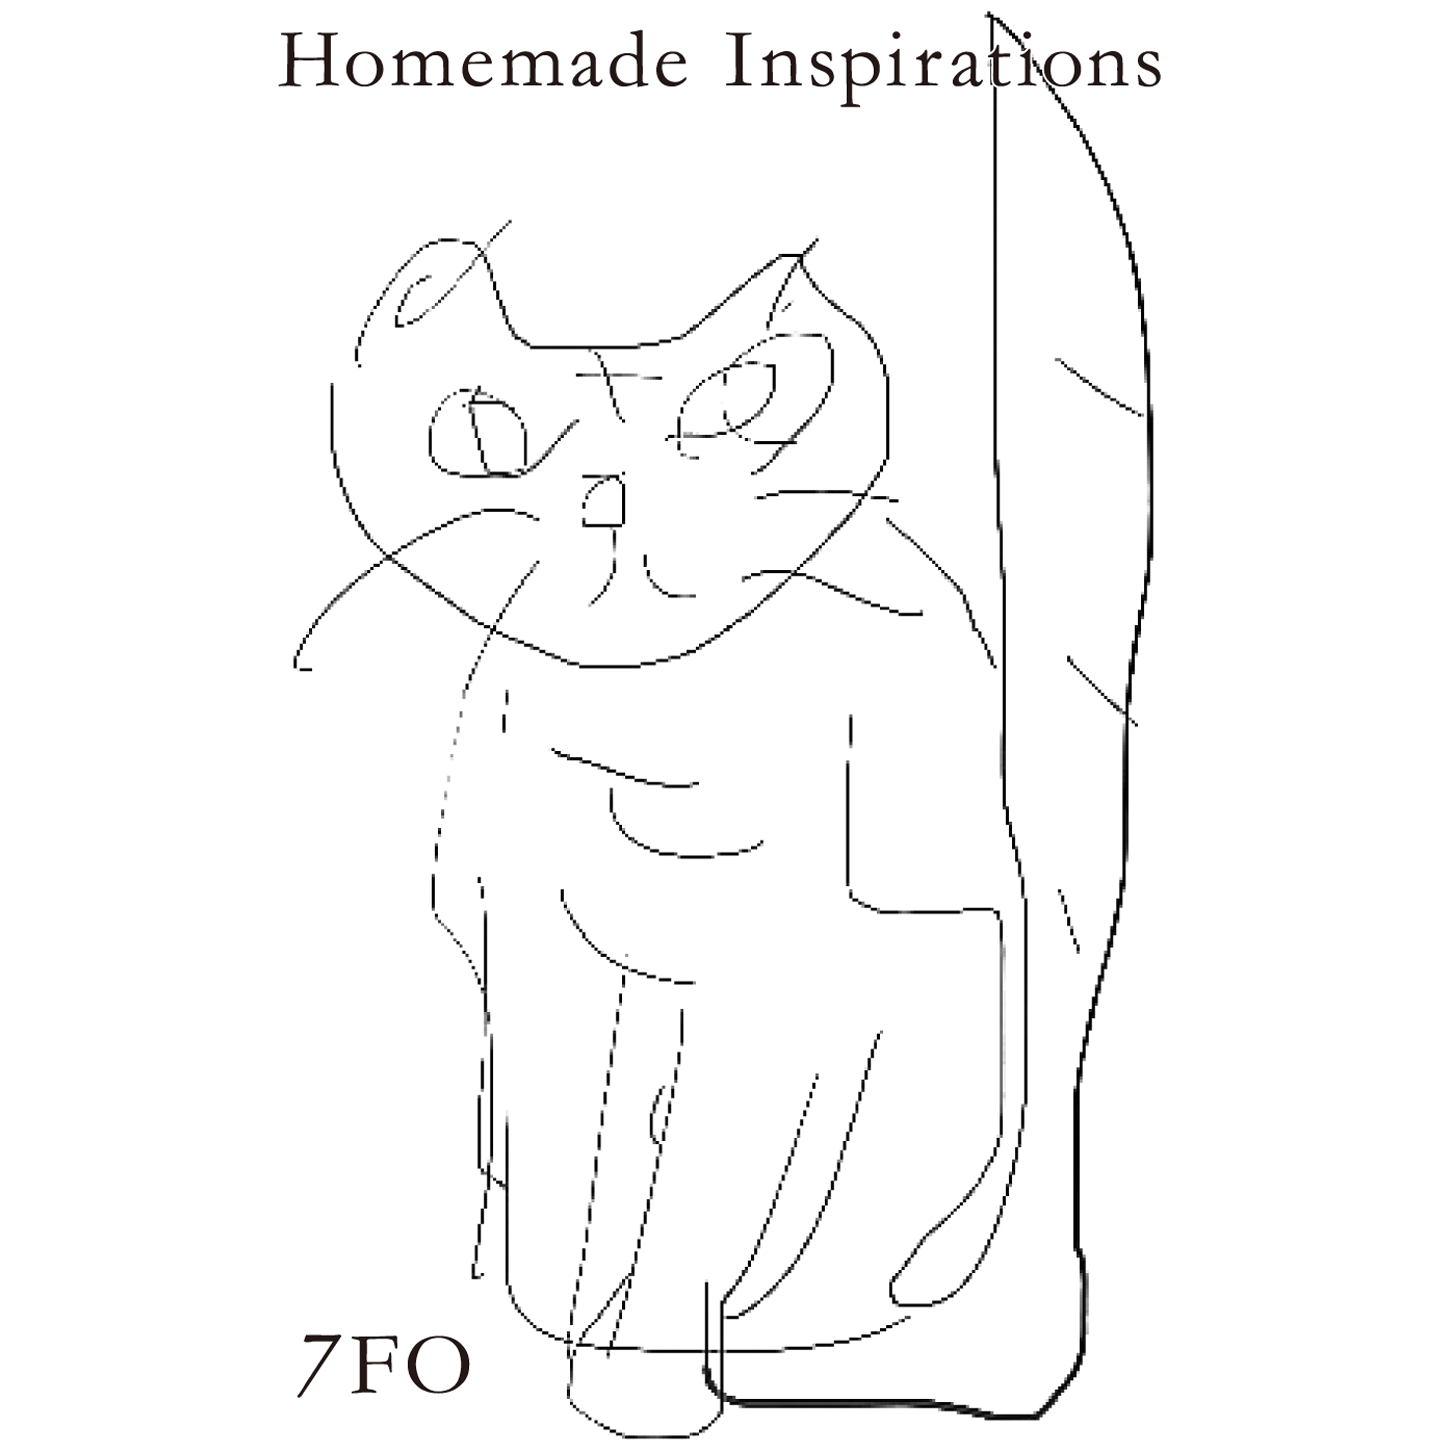 7FO / Homemade Inspirations